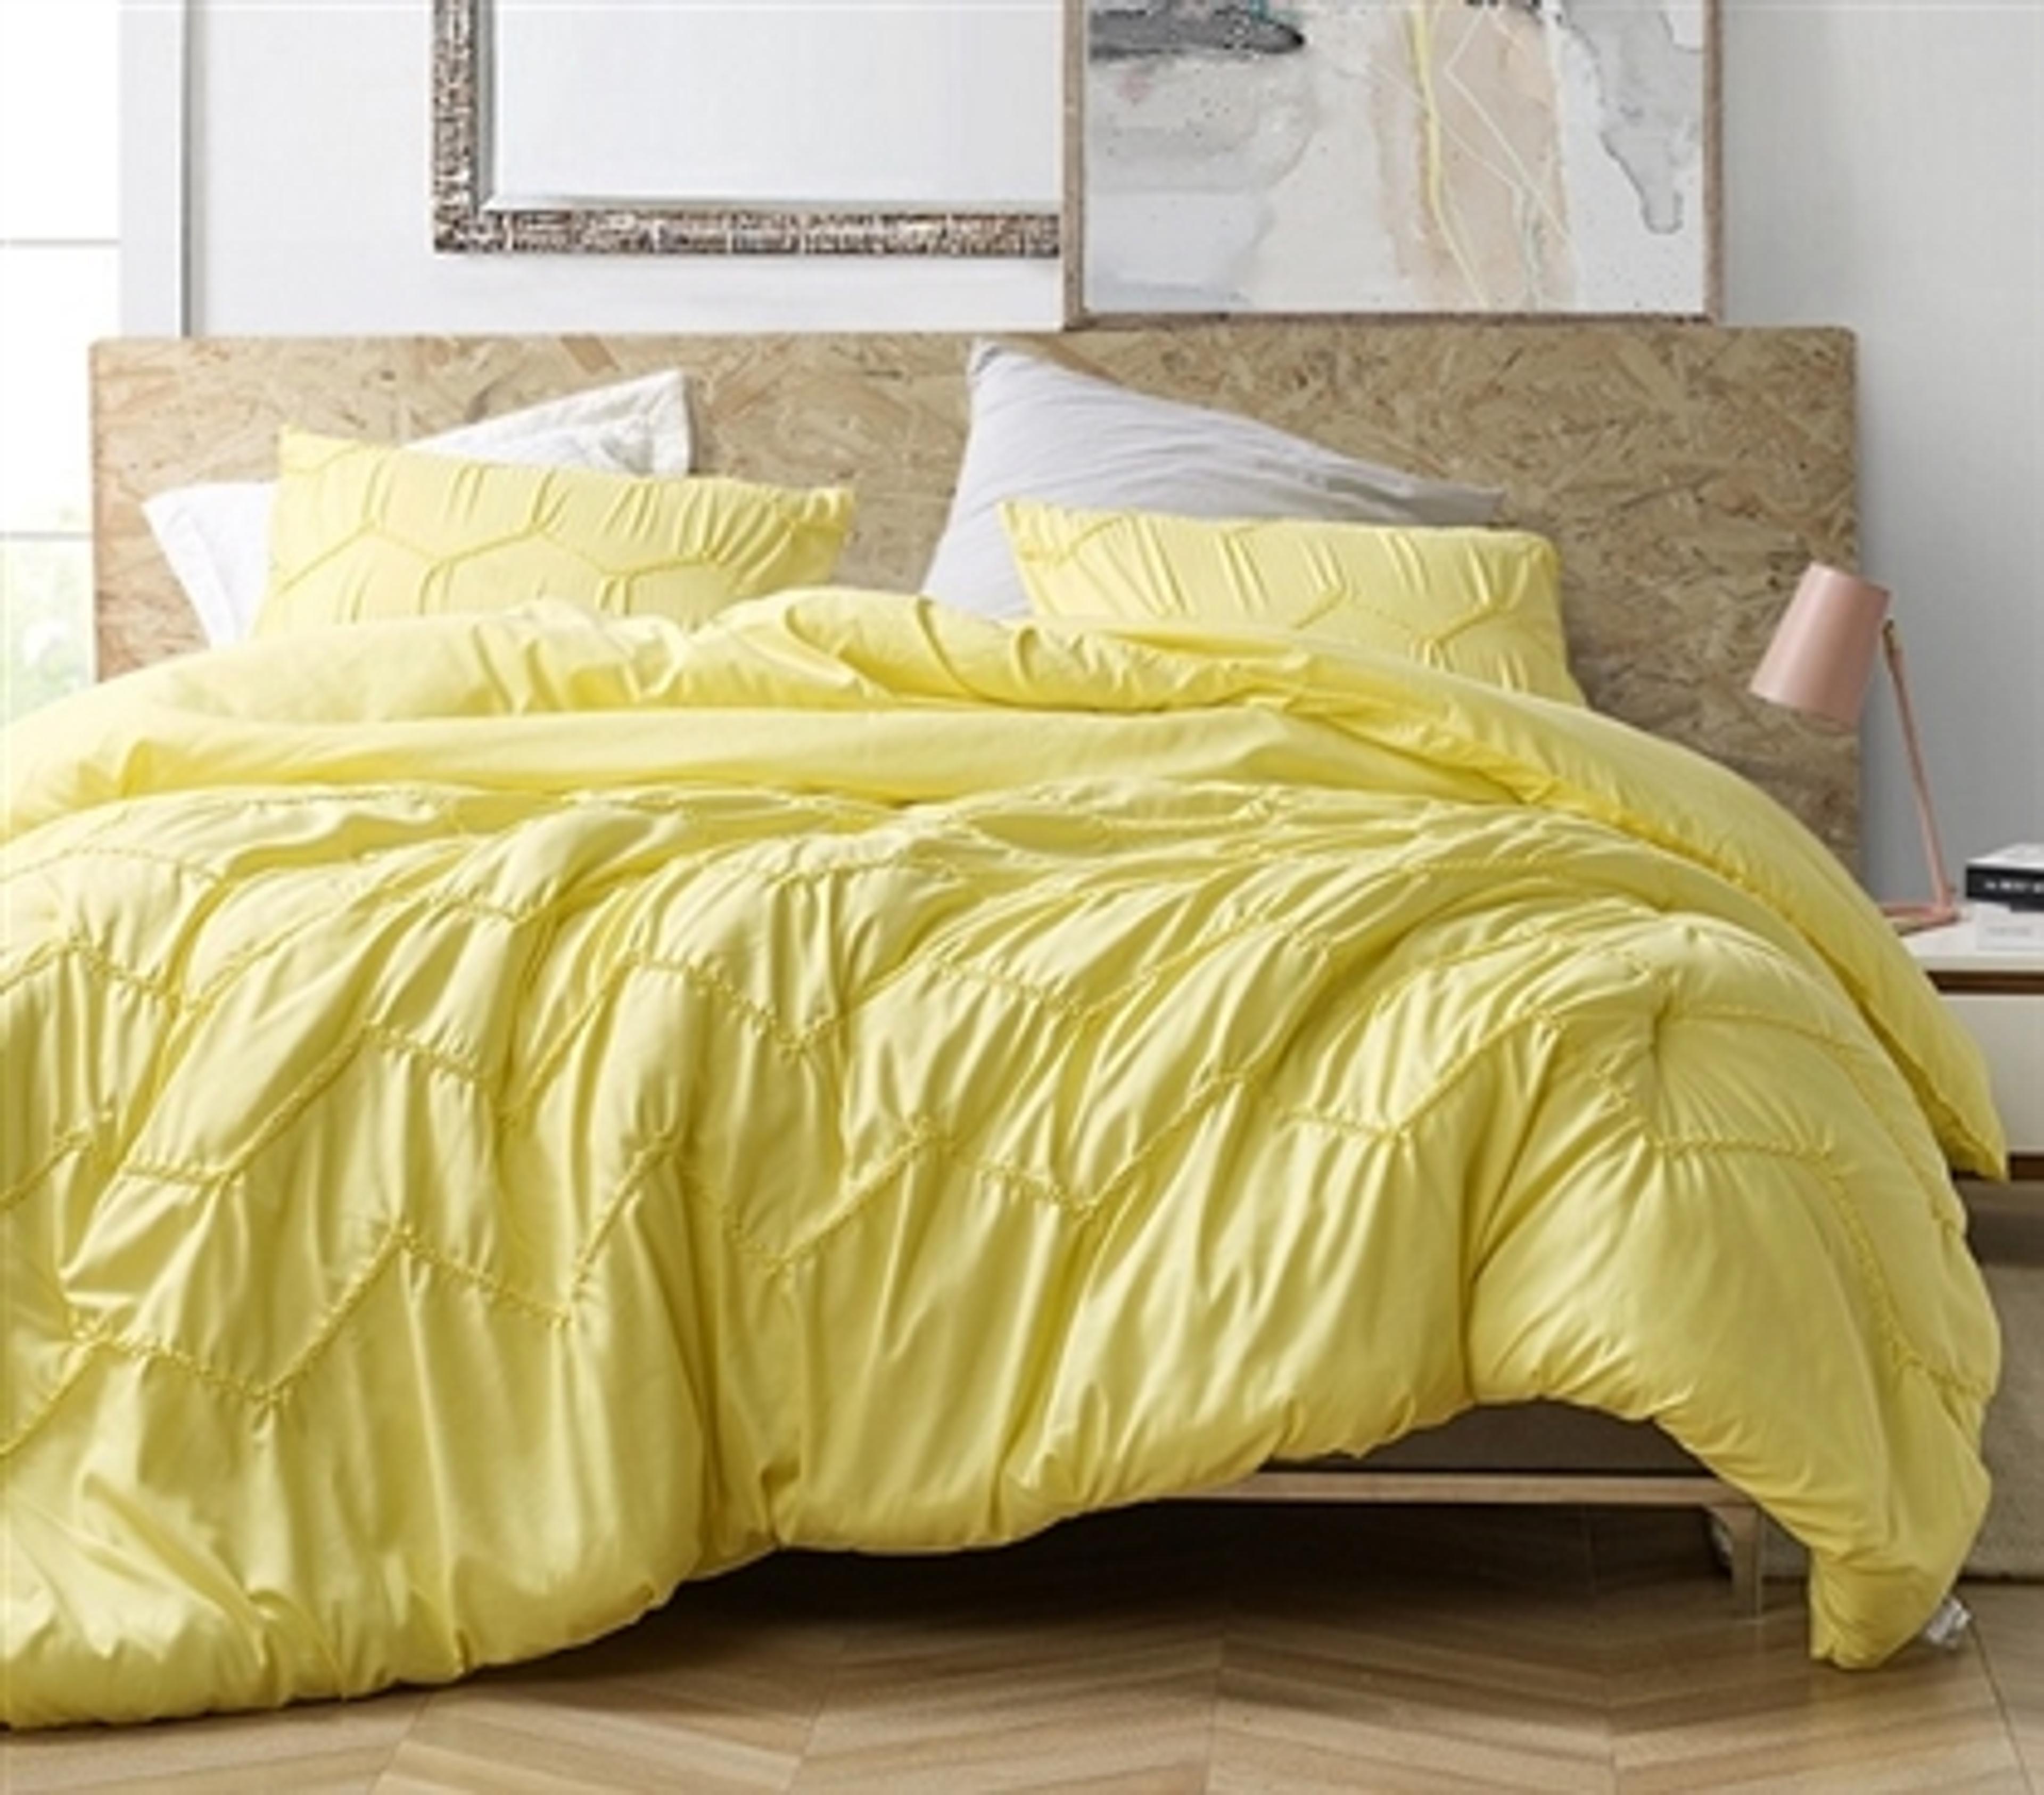 Yellow Dorm Bedding Set Colorful College Bedding Matching Pillow Cases Chevron Dorm Decor Ideas for Girls